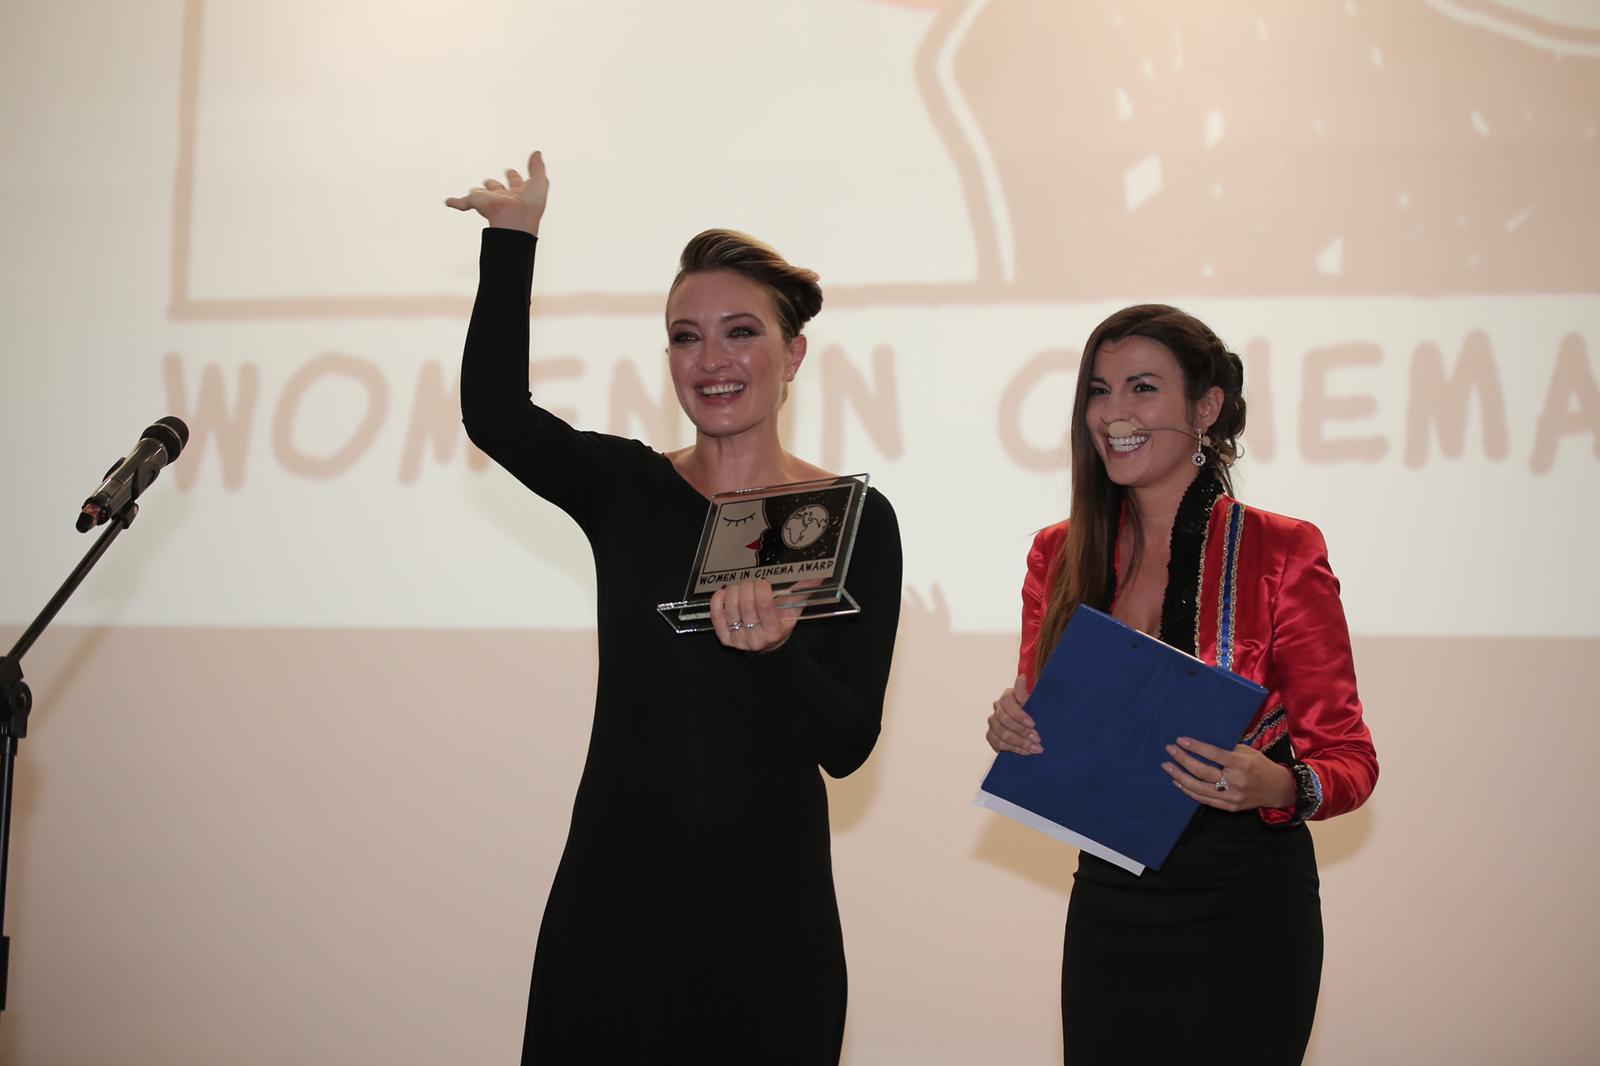 Women in cinema award at the rome film festival (4)